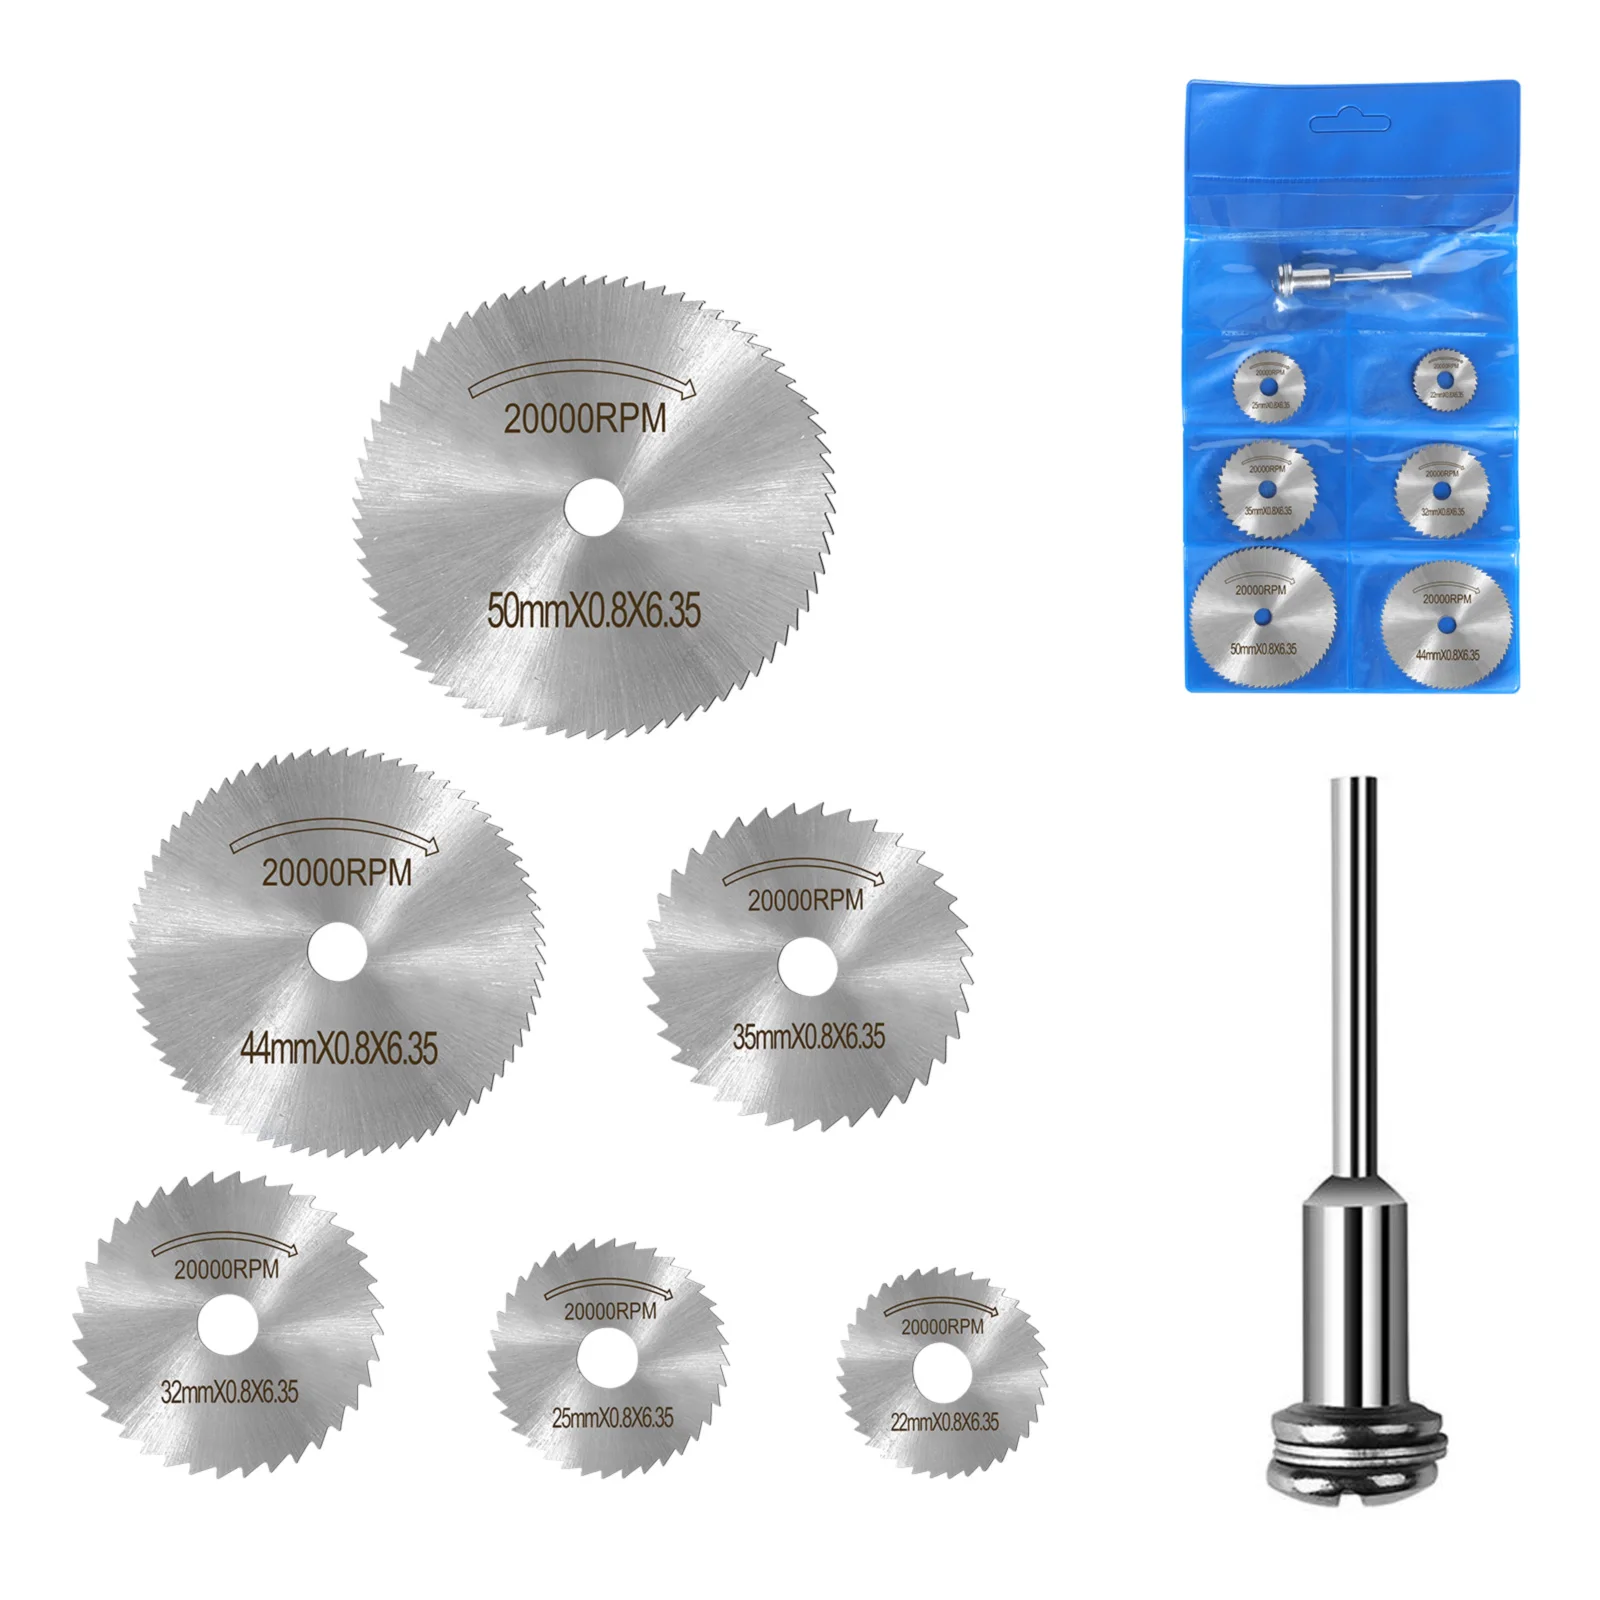 7pcs High Speed Steel Saw Disc Efficient Saws Wheels Small Metalworking Circular Slicers Mandrels Drills Tools